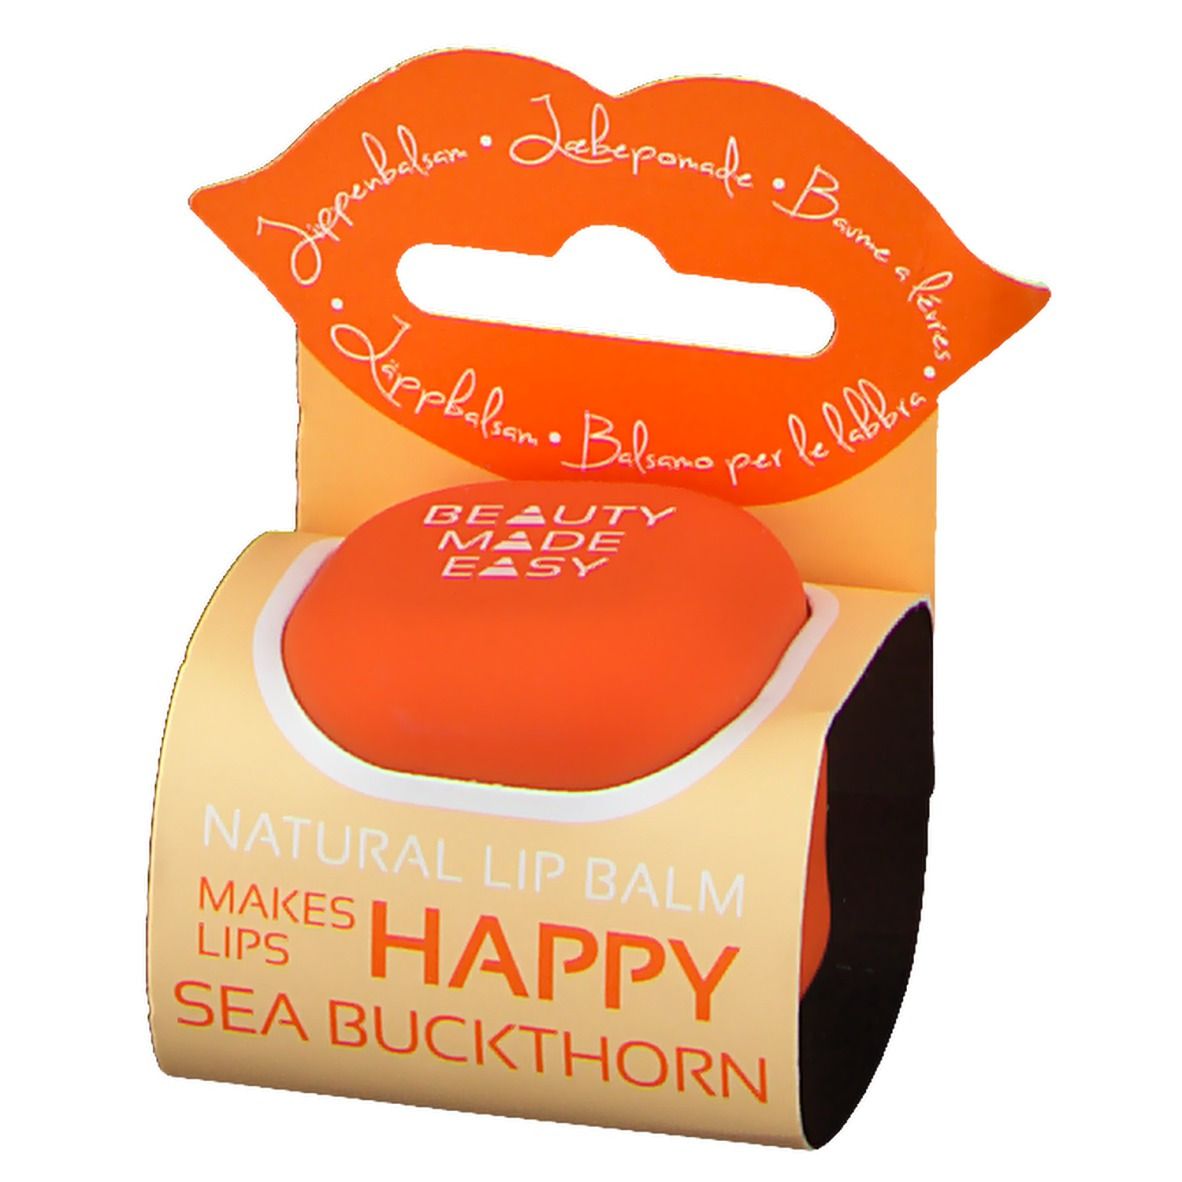 BEAUTY MADE EASY® Lip Balm Seabuckthorn